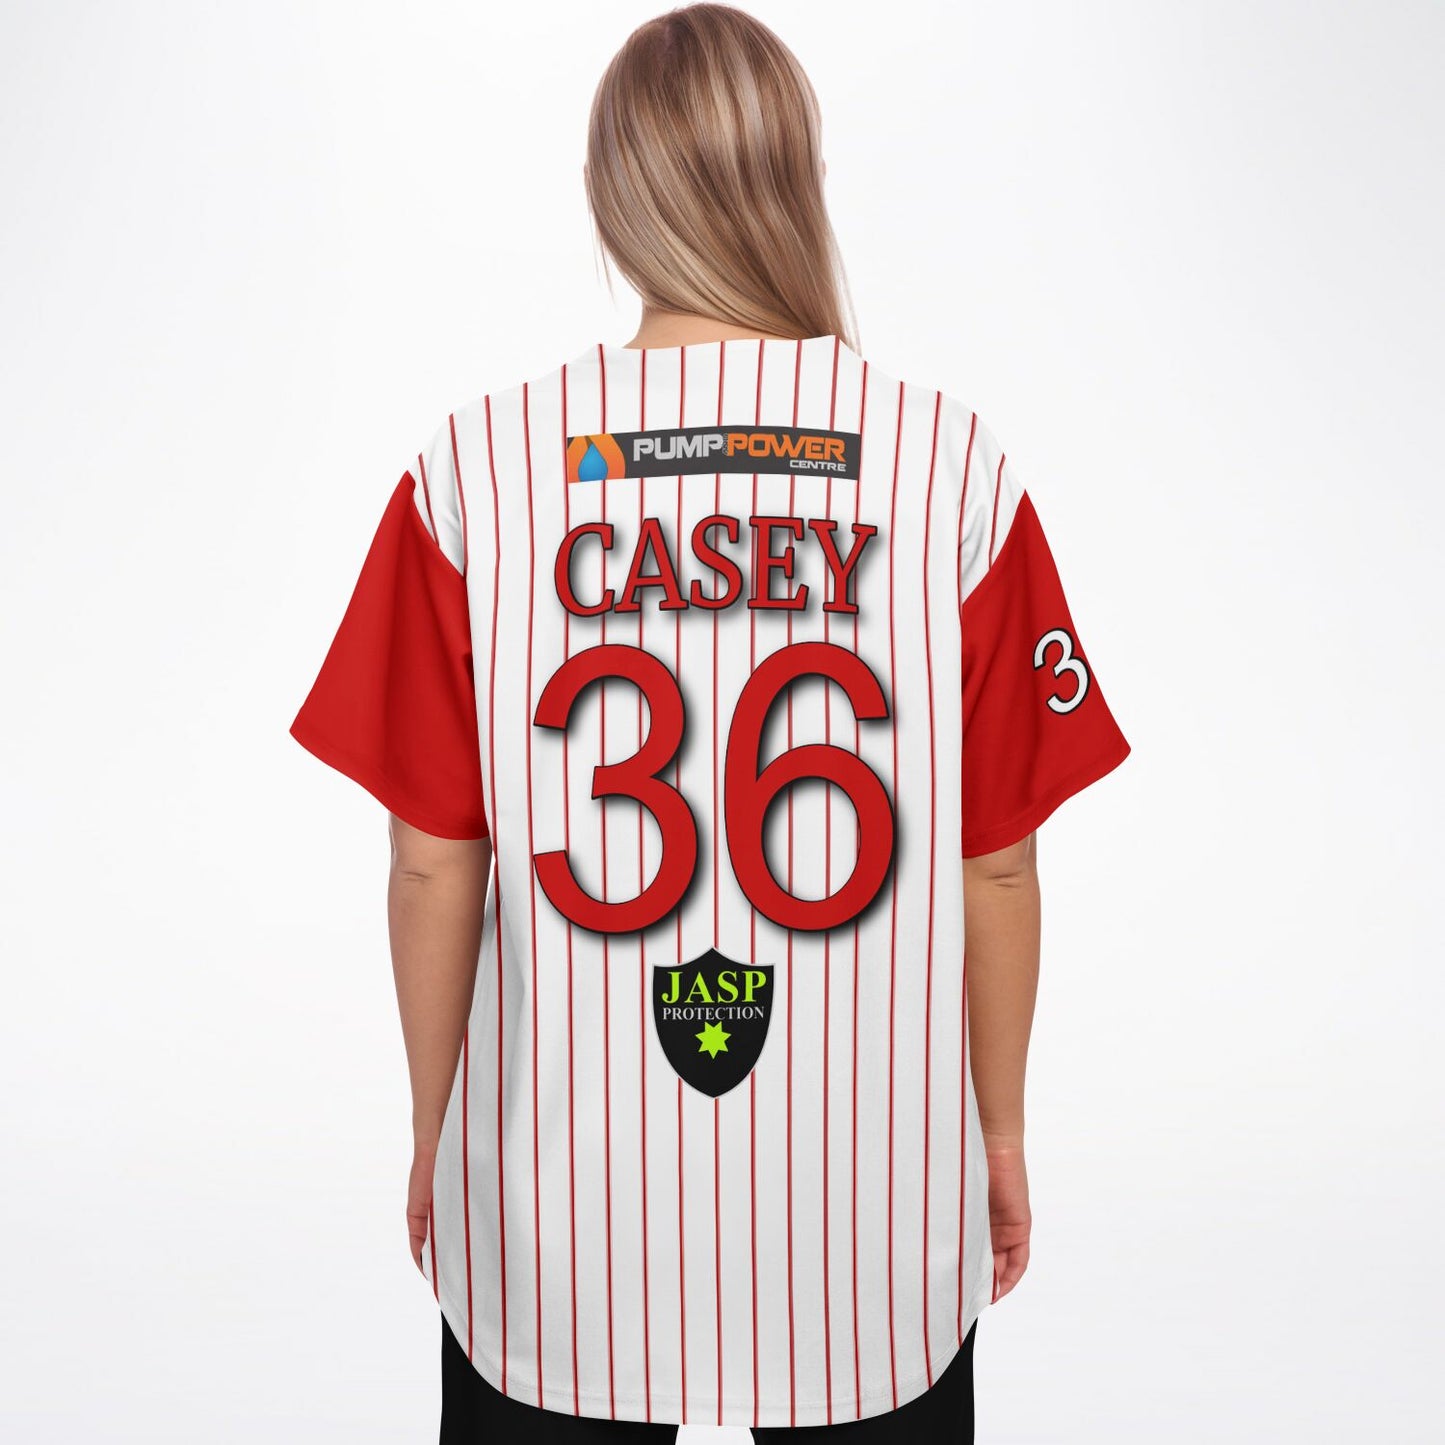 Casey #36 Demons Baseball Jersey - Home